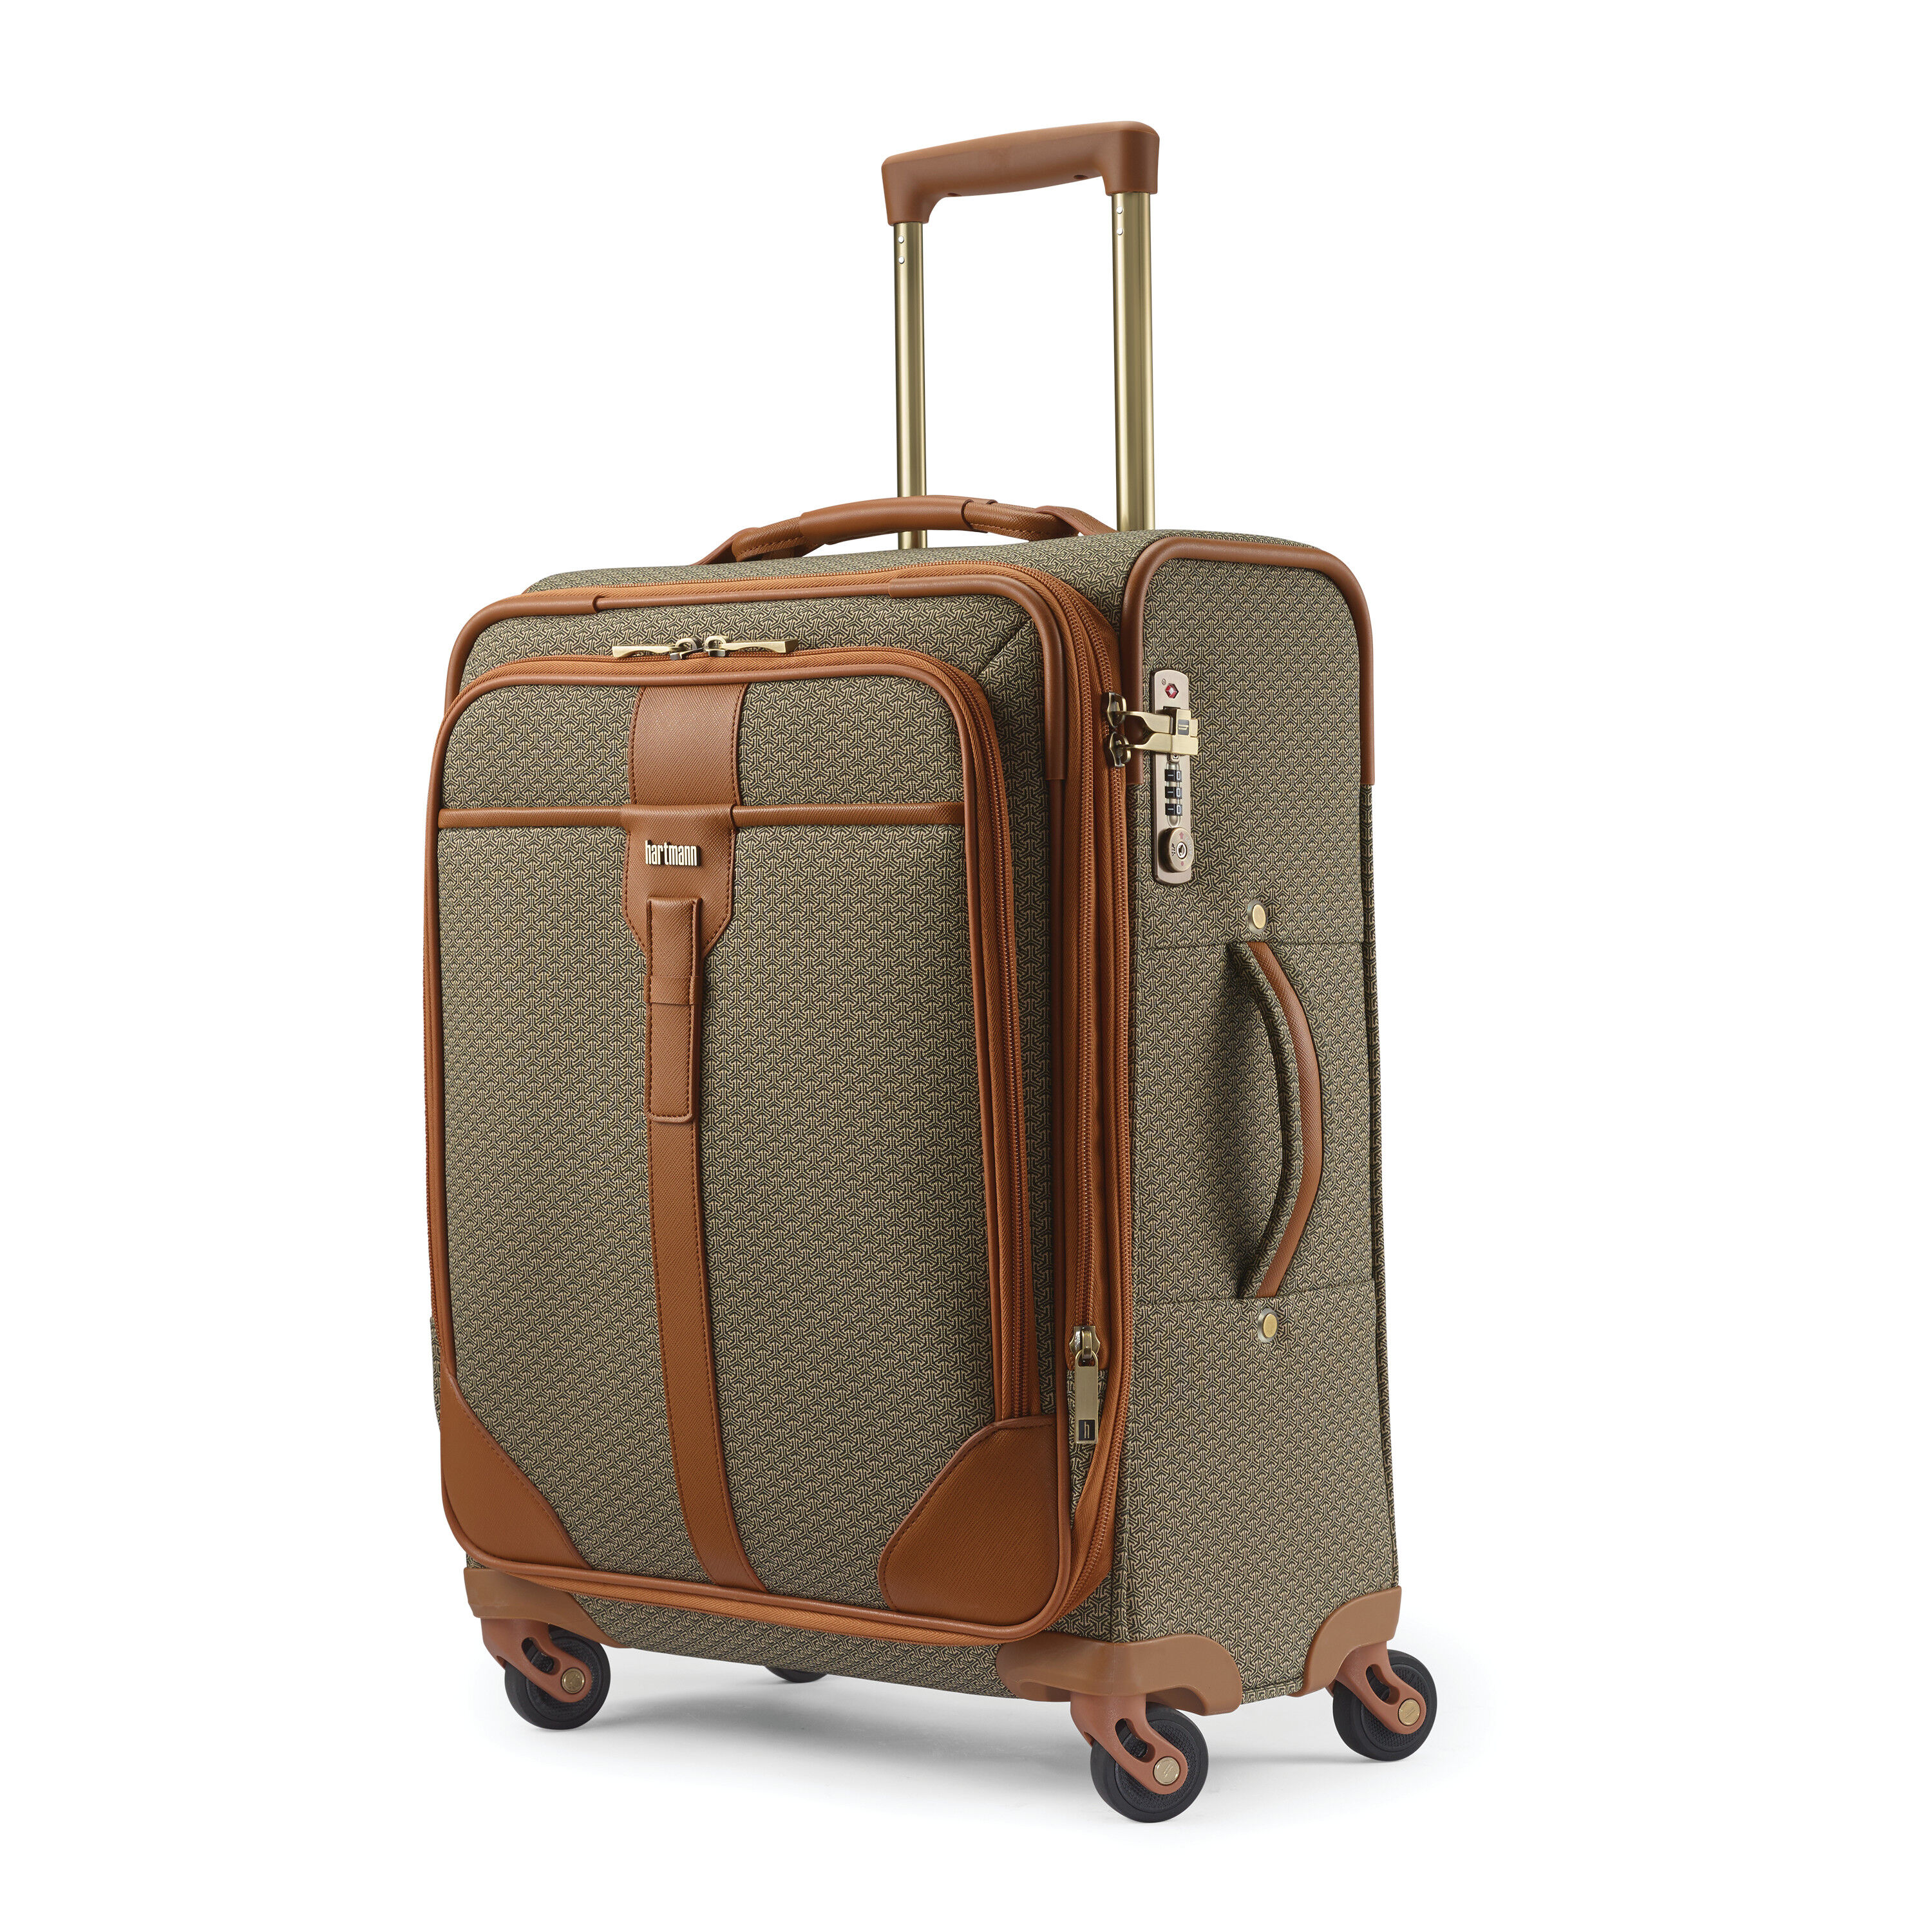 Hartmann Blue Tweed & Leather Luggage - Suitcase 26 x 20 - Vintage | eBay